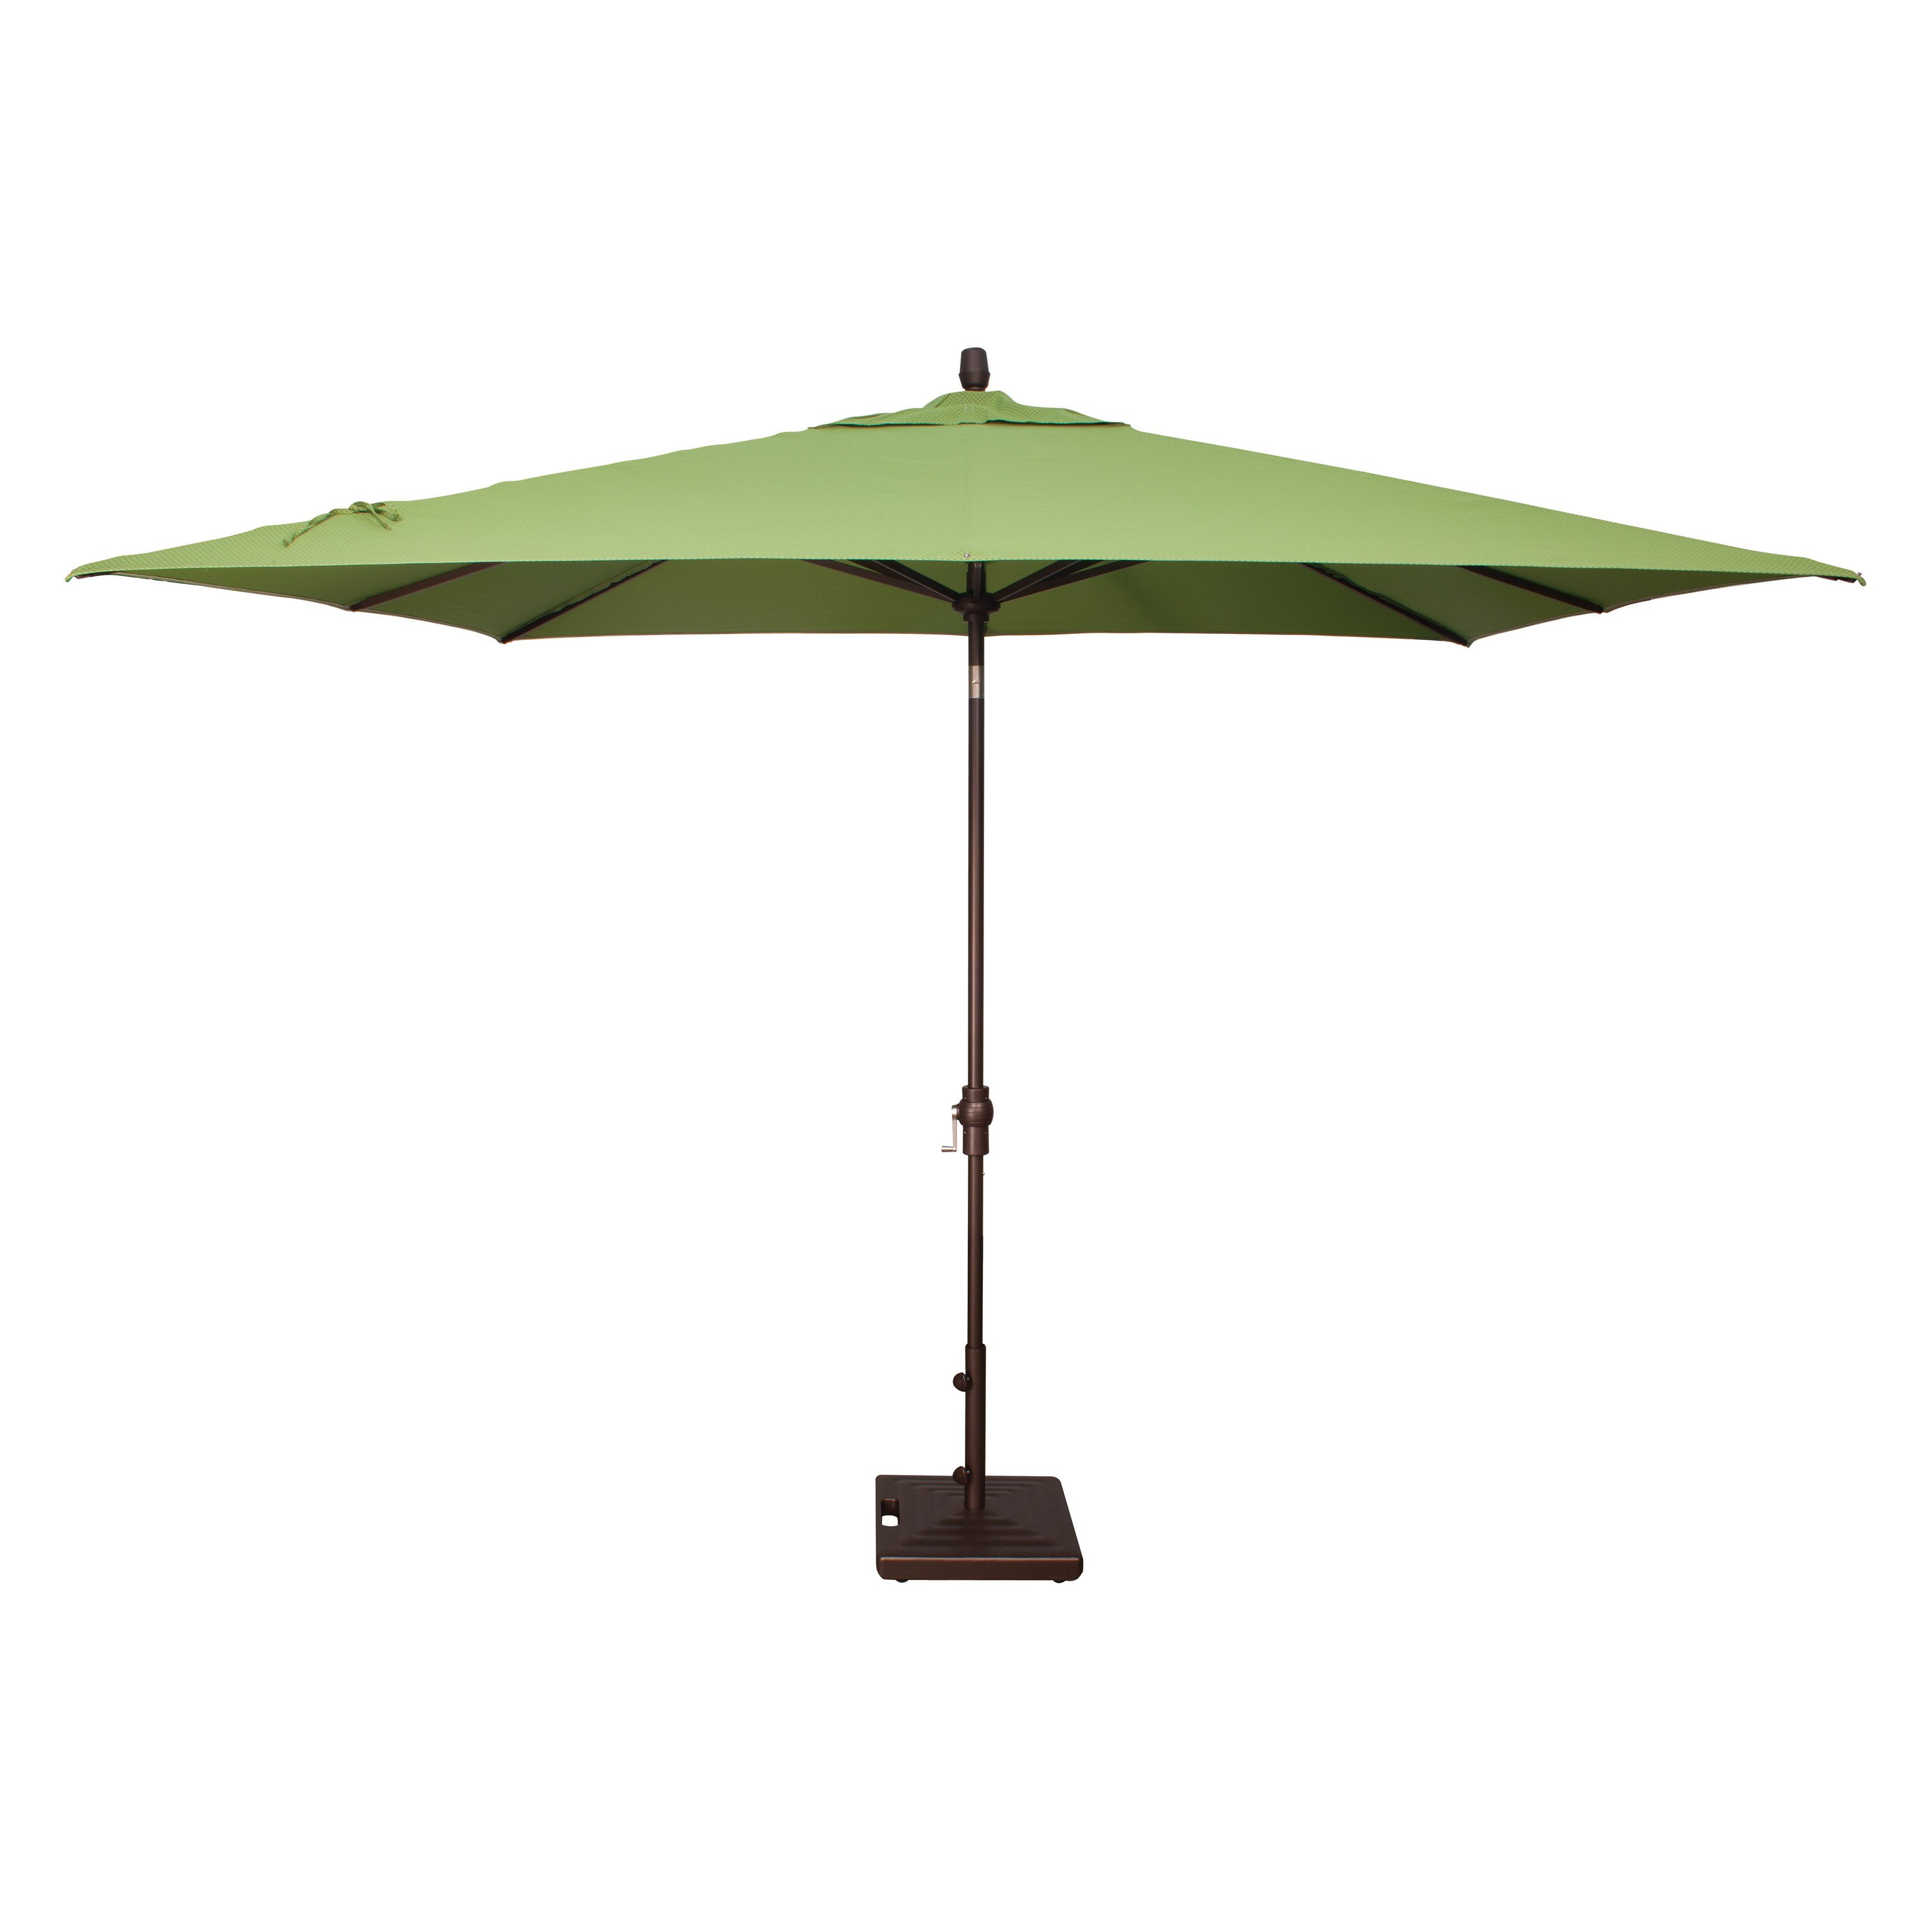 Best ideas about Patio Table Umbrellas
. Save or Pin Treasure Garden Ft Sunbrella Aluminium Auto Tilt Patio Now.